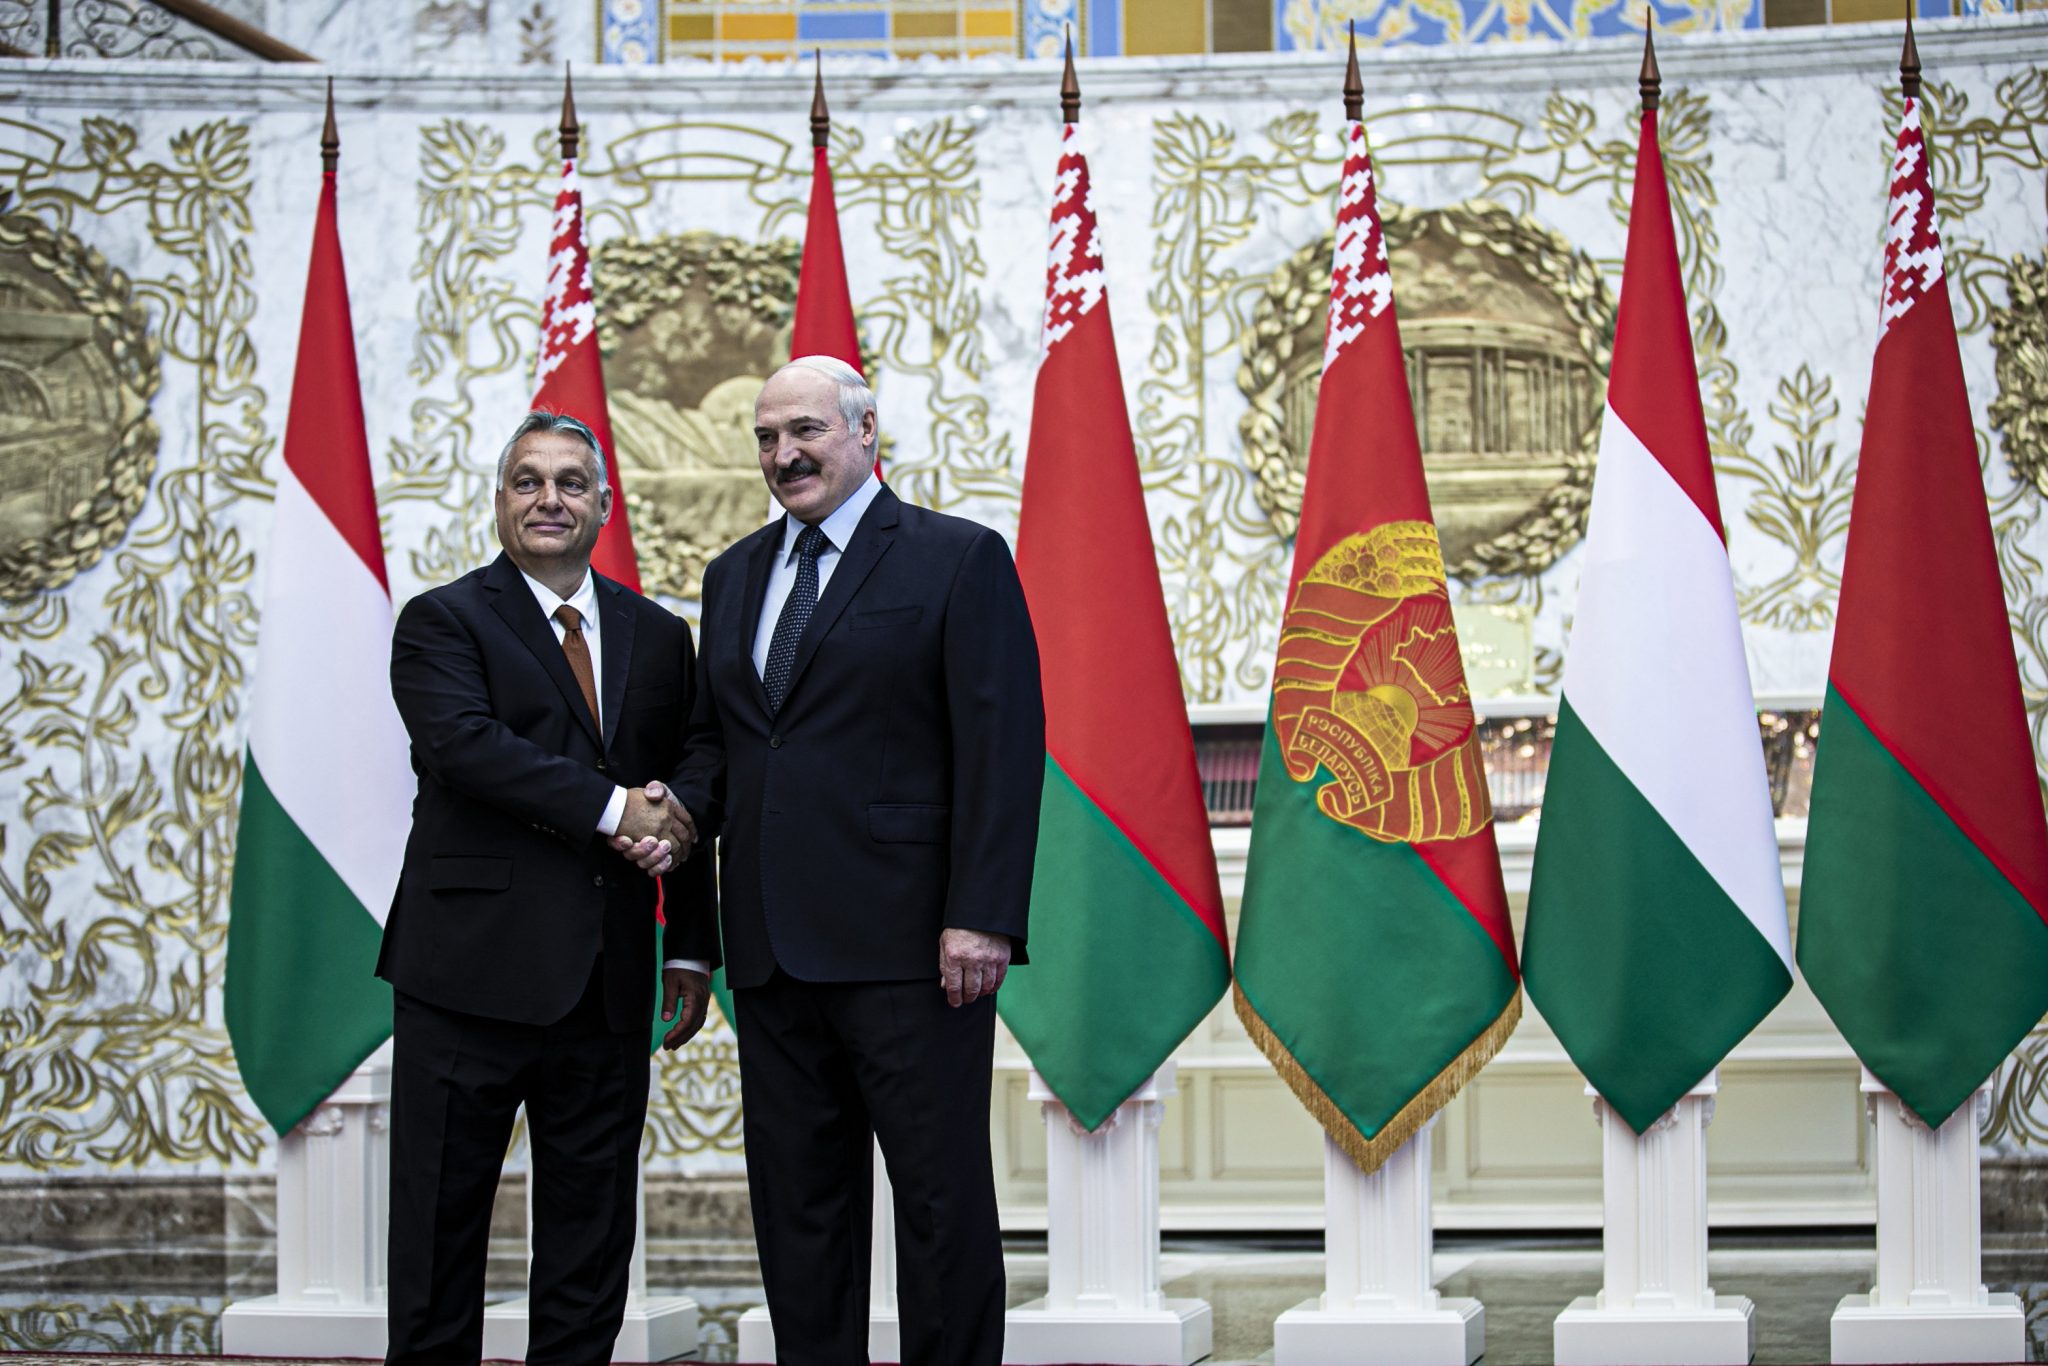 Orbán Calls for Closer Hungary-Belarus Ties